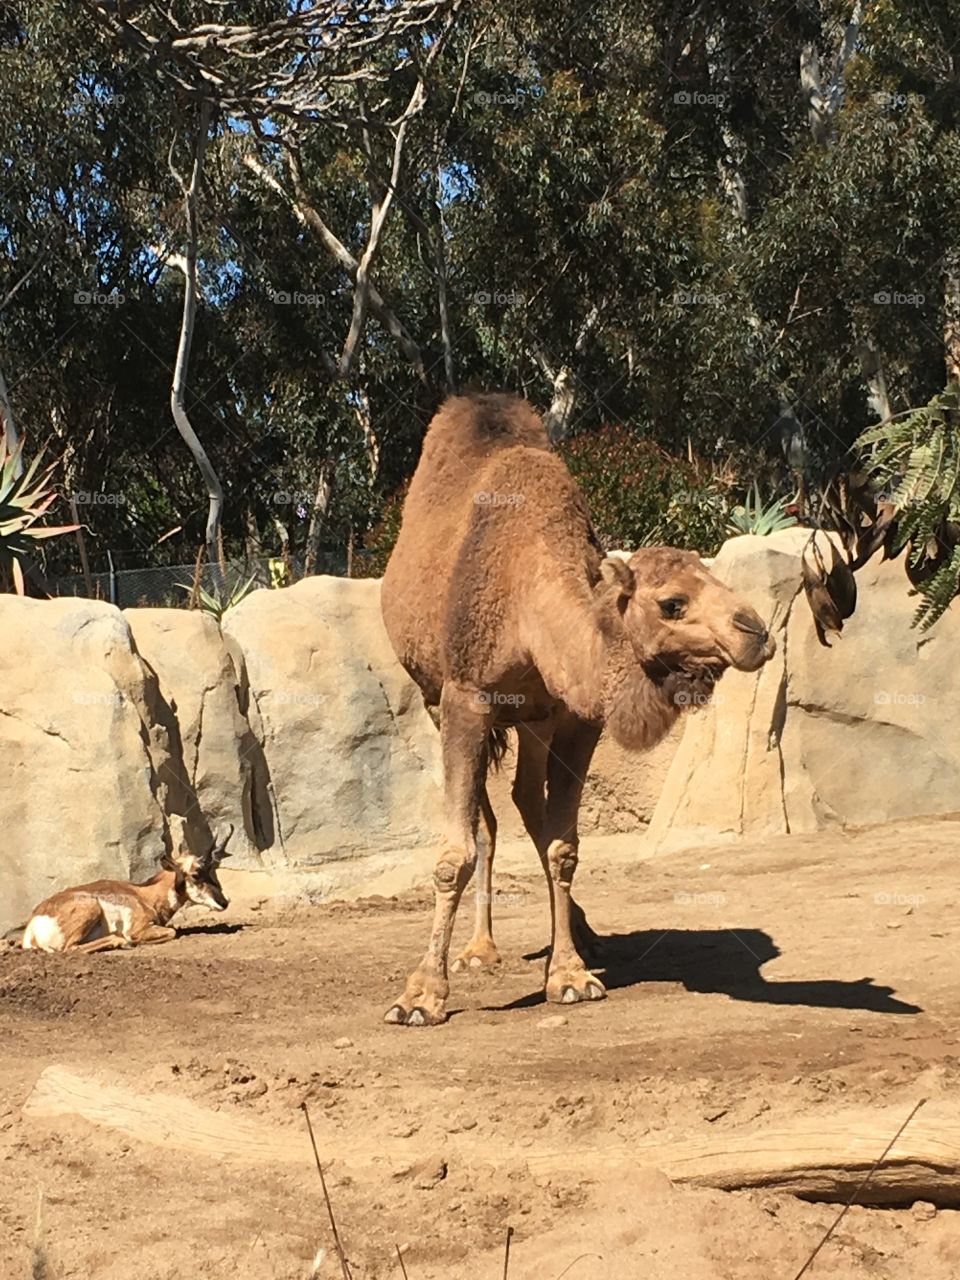 Grazing camel in the heat.